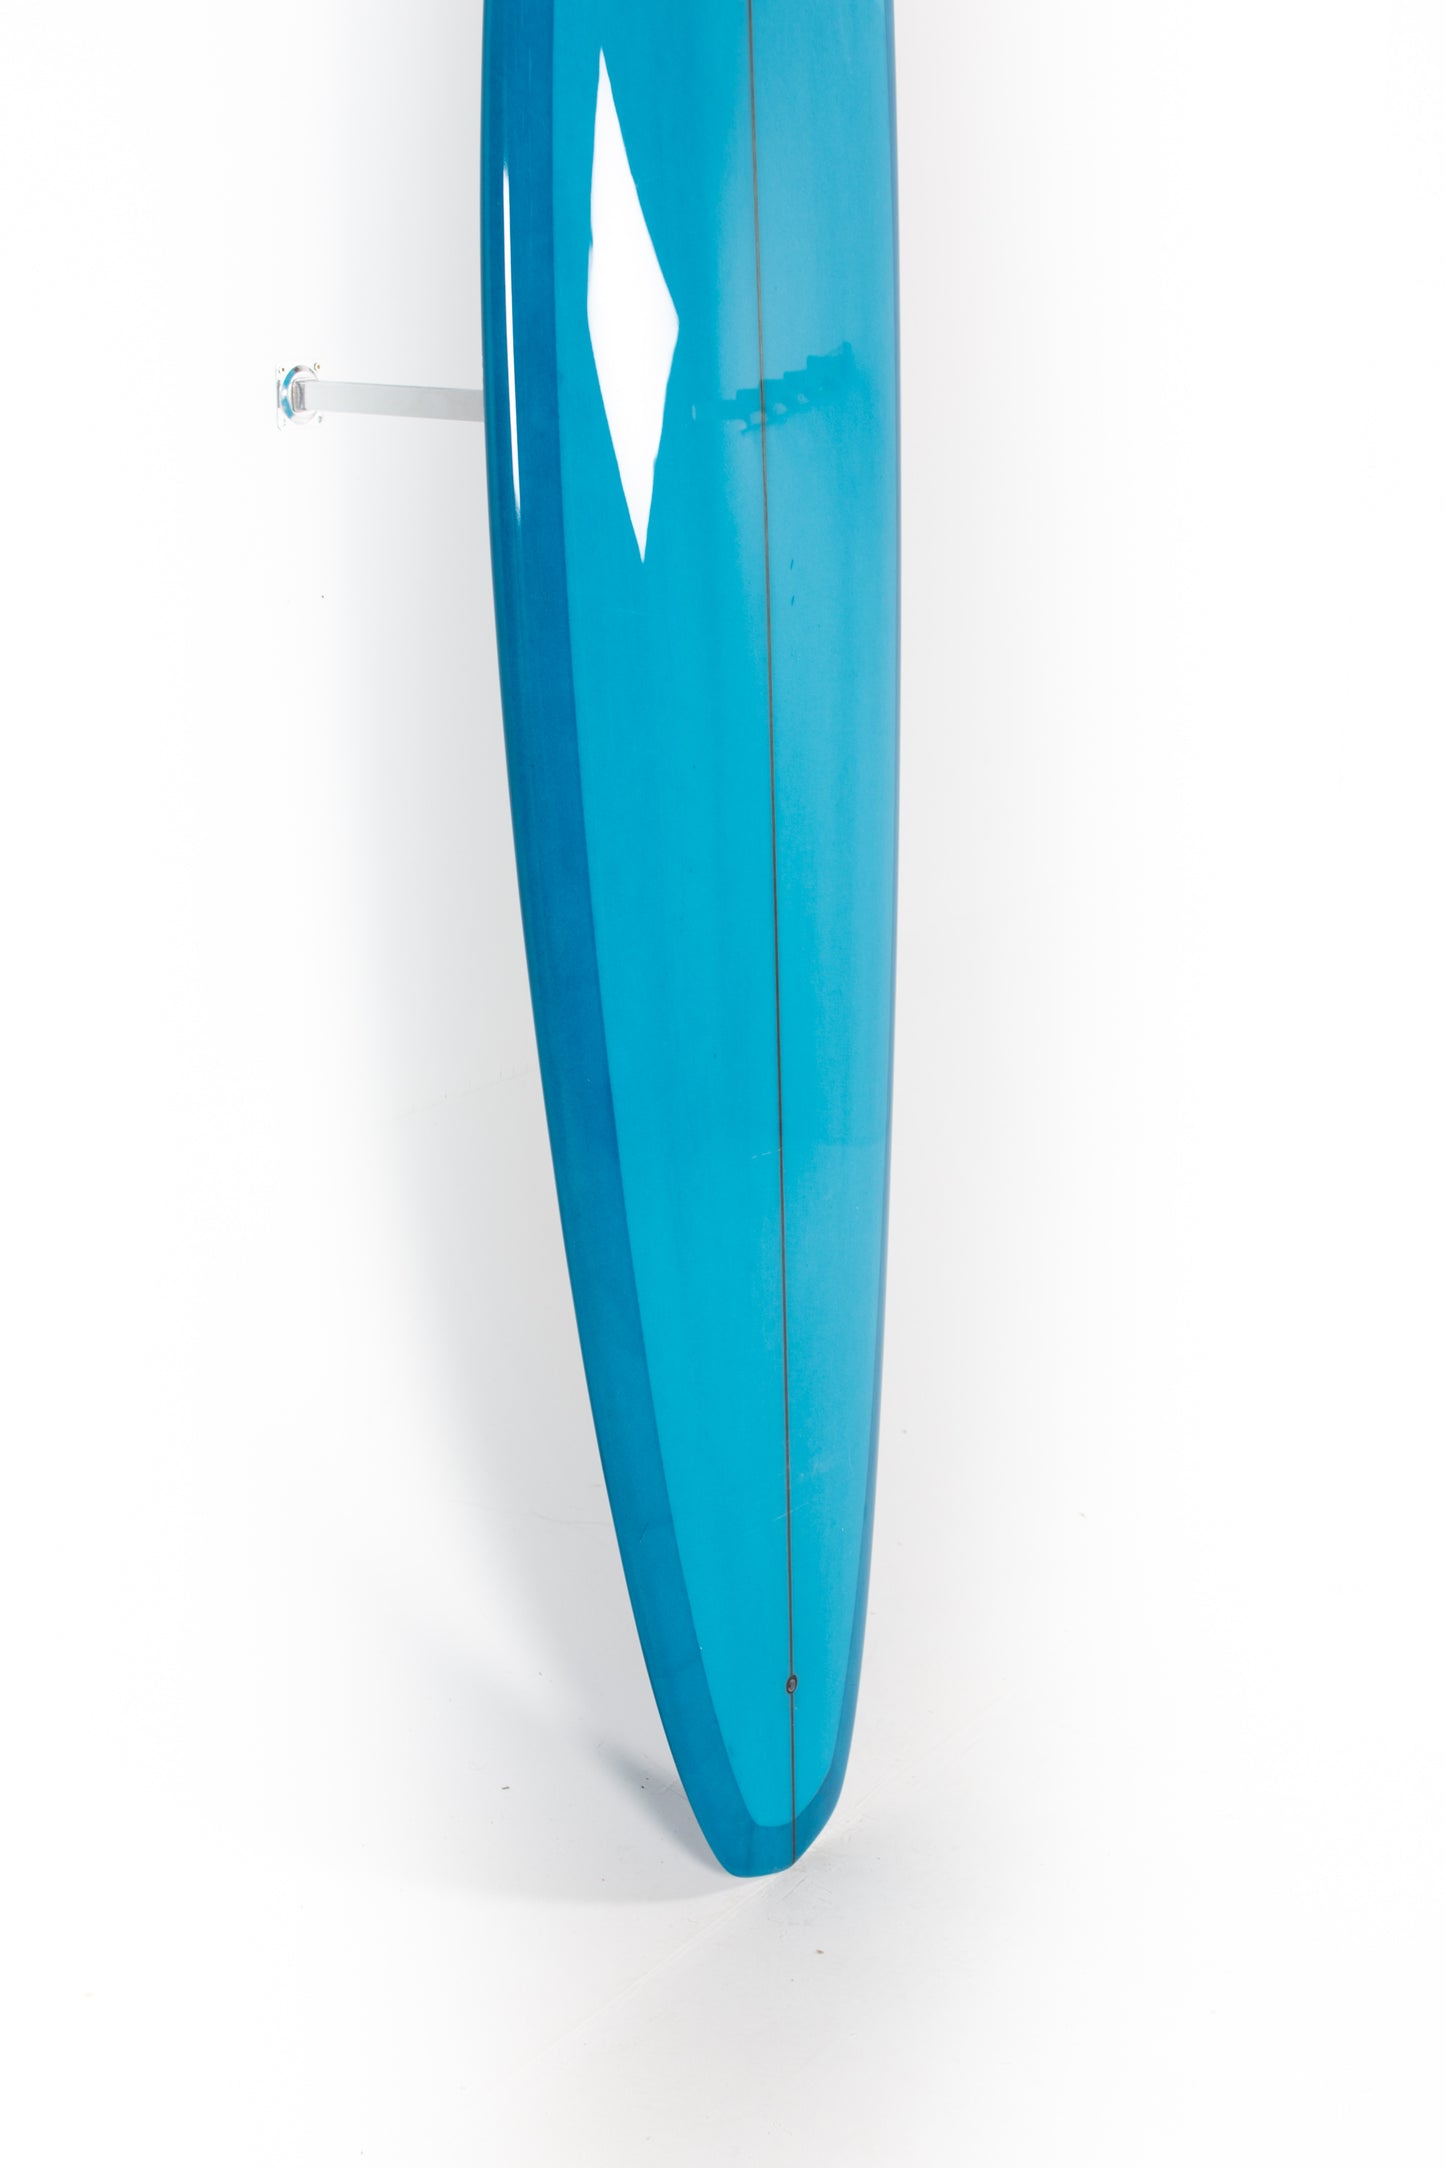 
                  
                    Pukas Surf Shop - Christenson Surfboards - ULTRA TRACKER - 7'6" x 21 3/8 x 3 - CX04023
                  
                